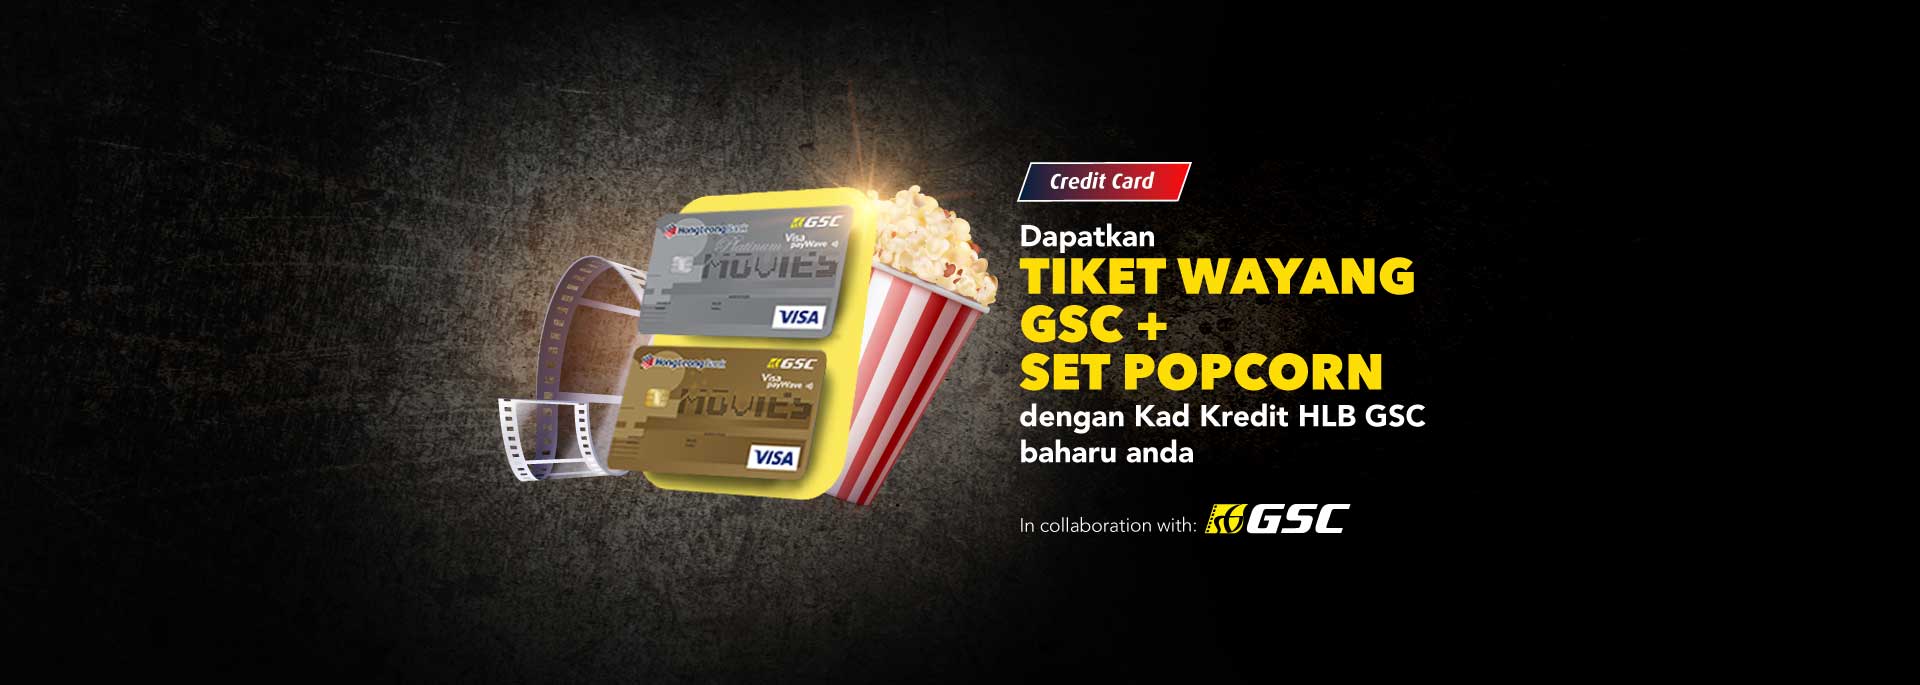 Dapatkan tiket wayang GSC BIG & set popcorn